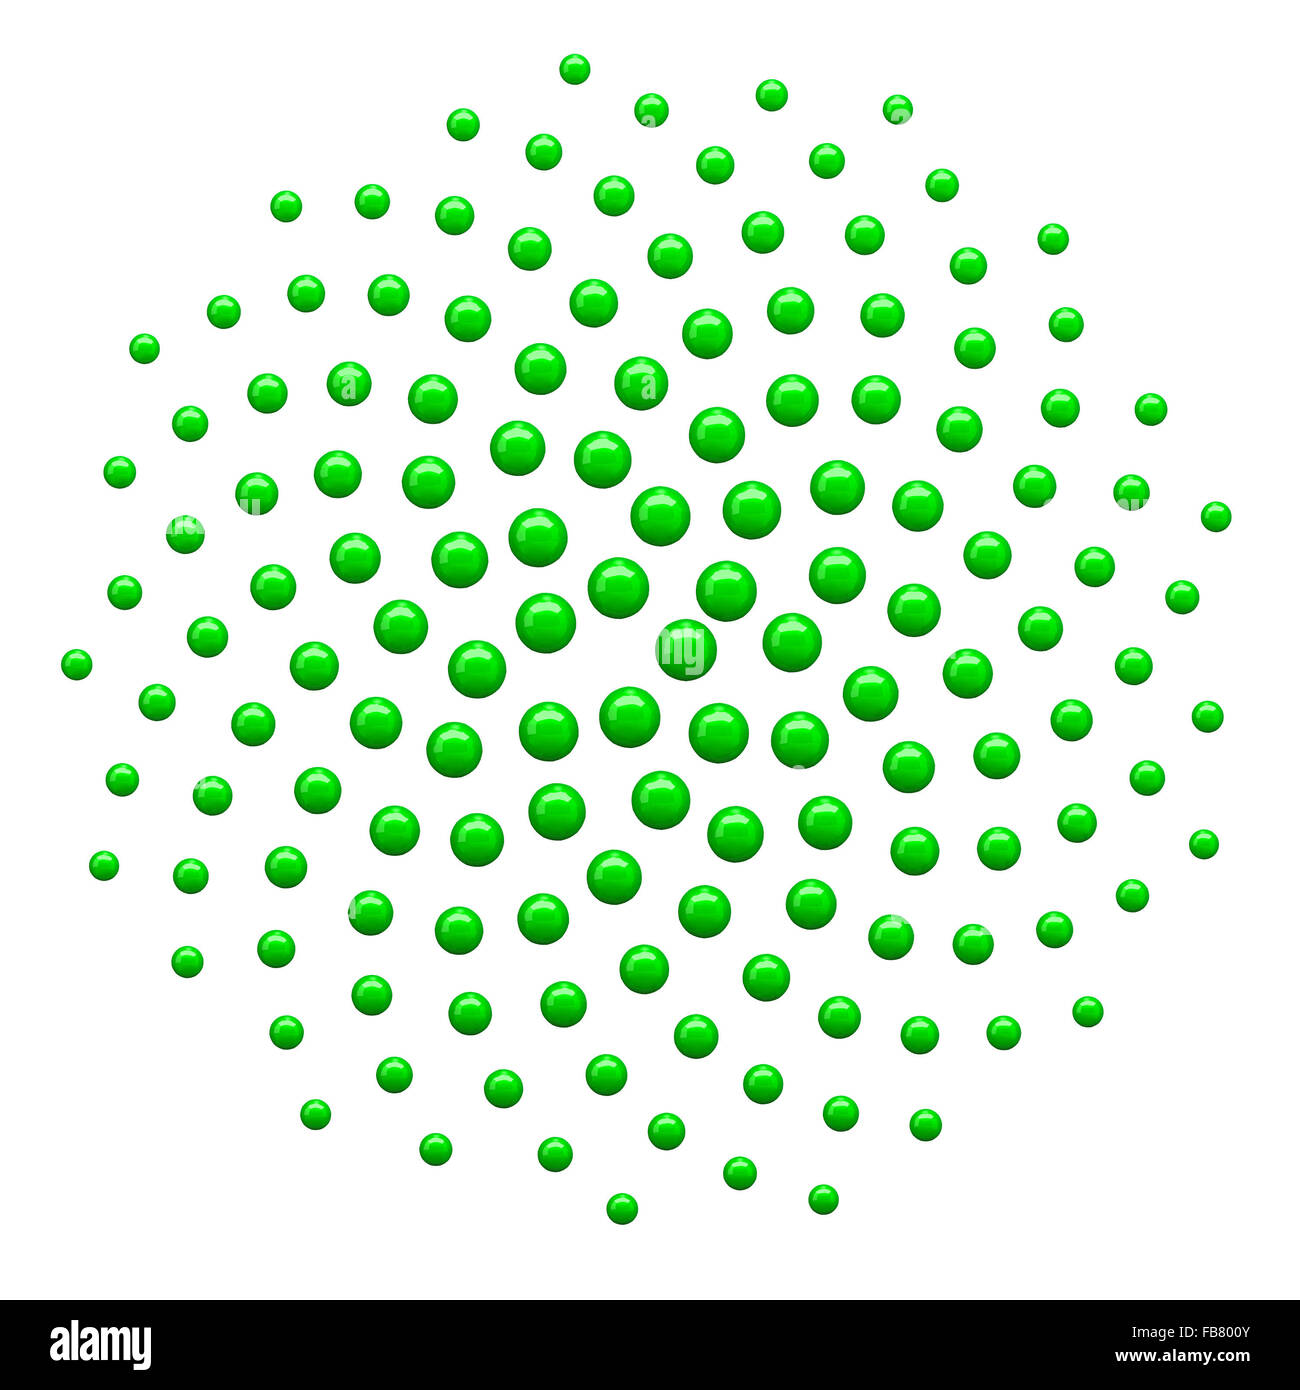 Royalty free clipart illustration of a 3d green spiral fibonacci mathematics dot pattern, on a white background. Stock Photo